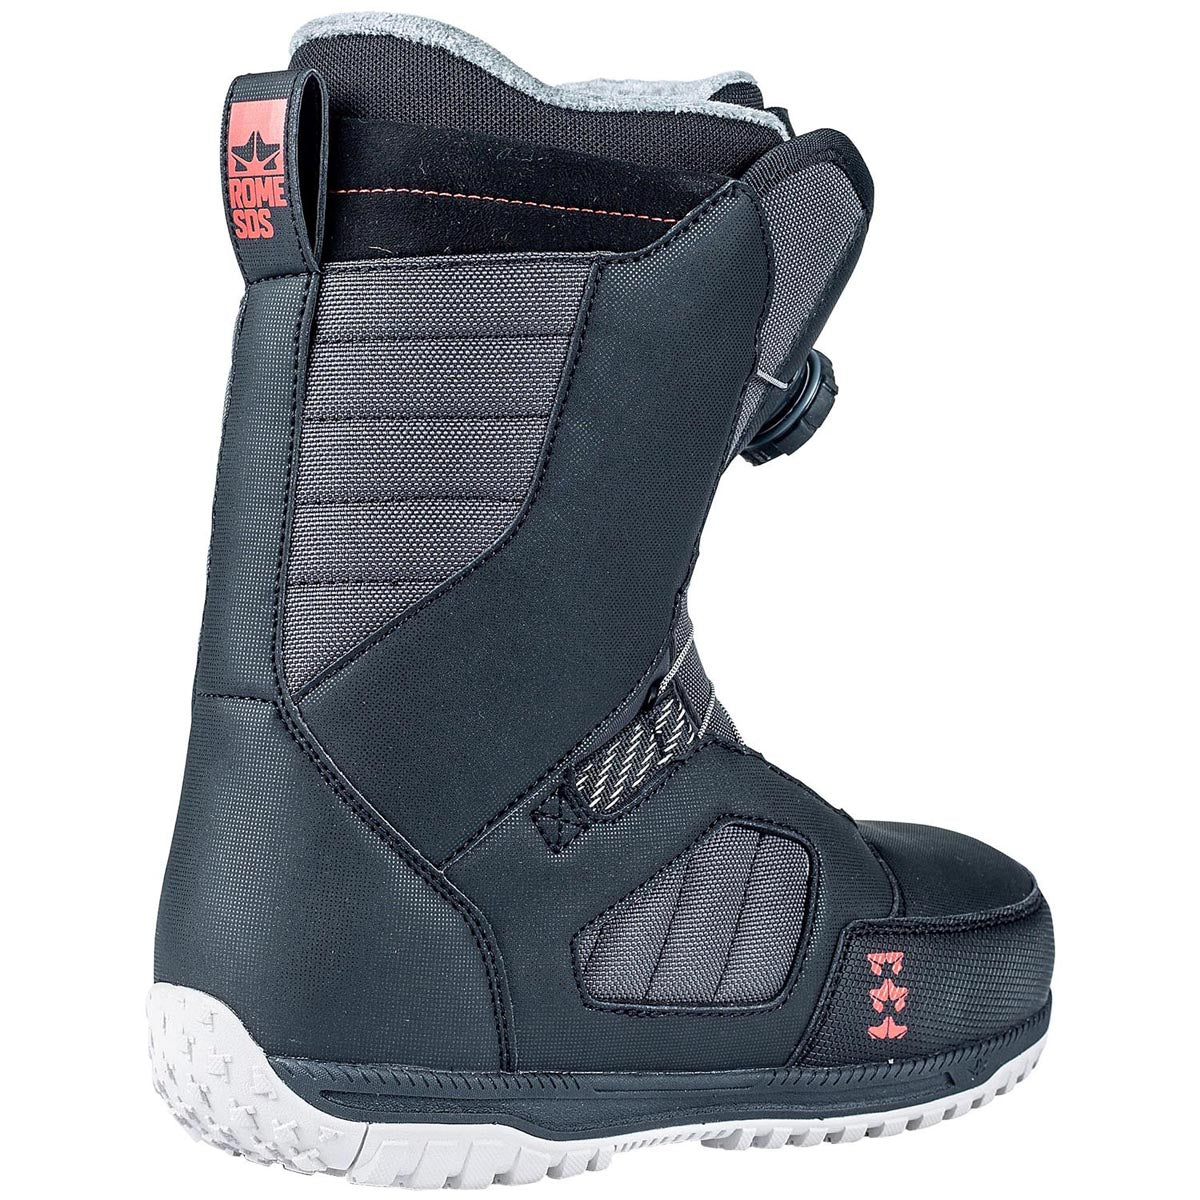 Rome SDS Womens Stomp Boa 2024 Snowboard Boots - Black image 3